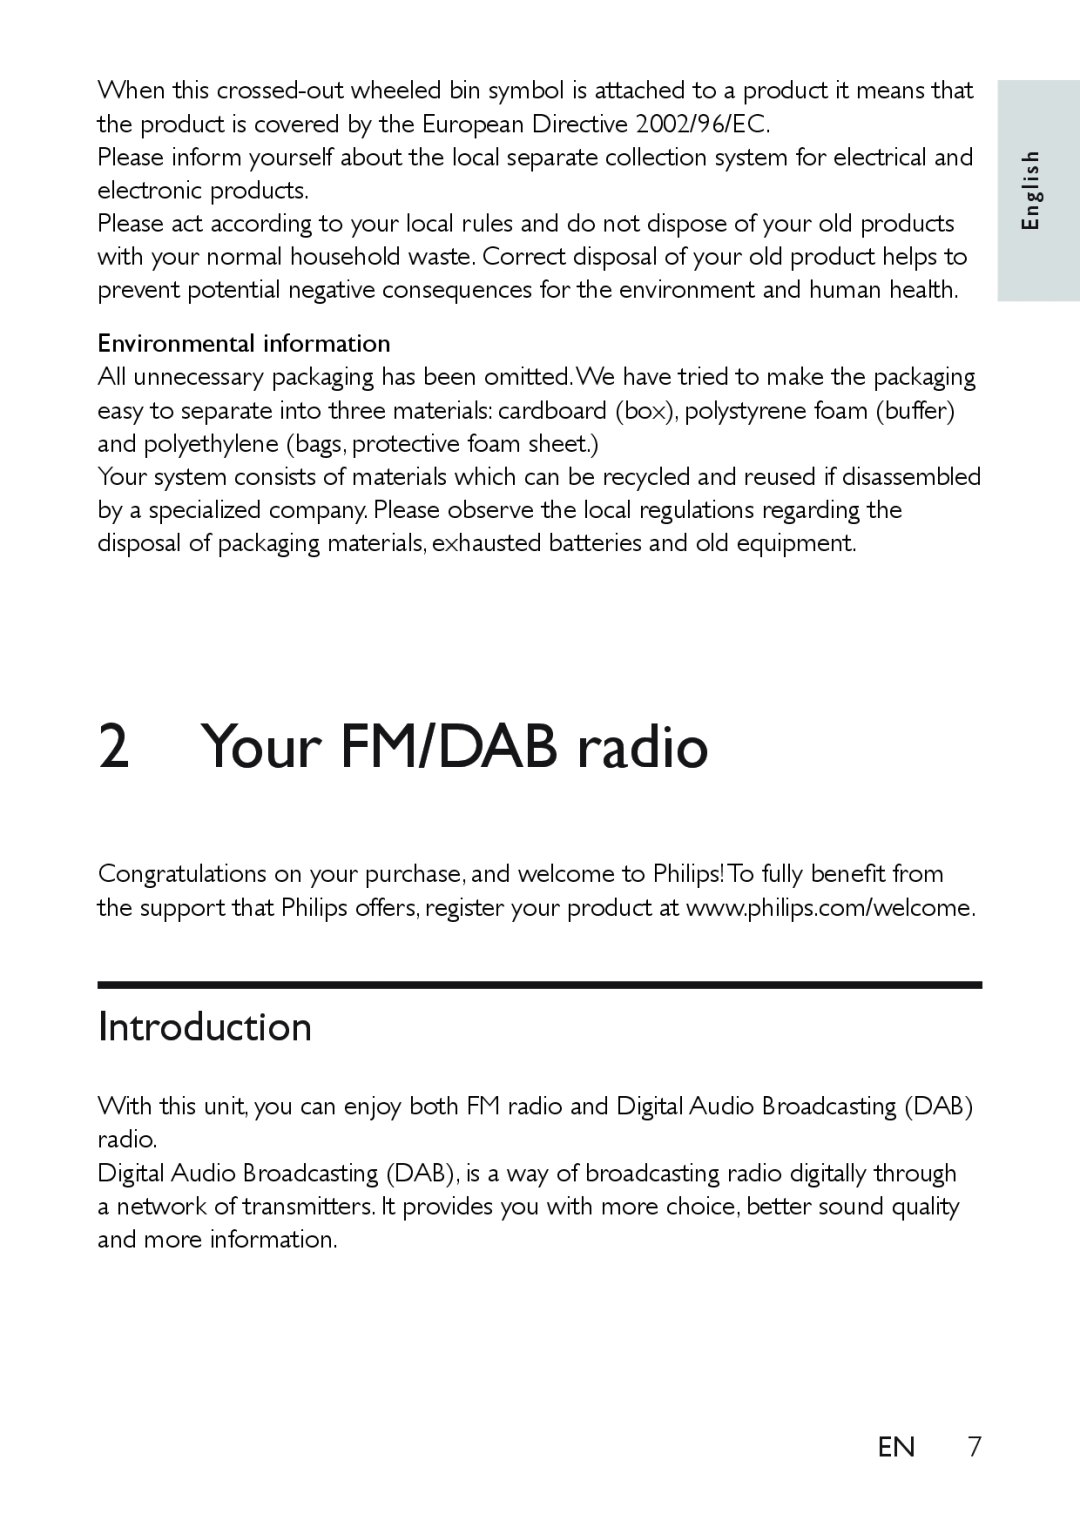 Philips AE9011 user manual Your FM/DAB radio, Introduction 